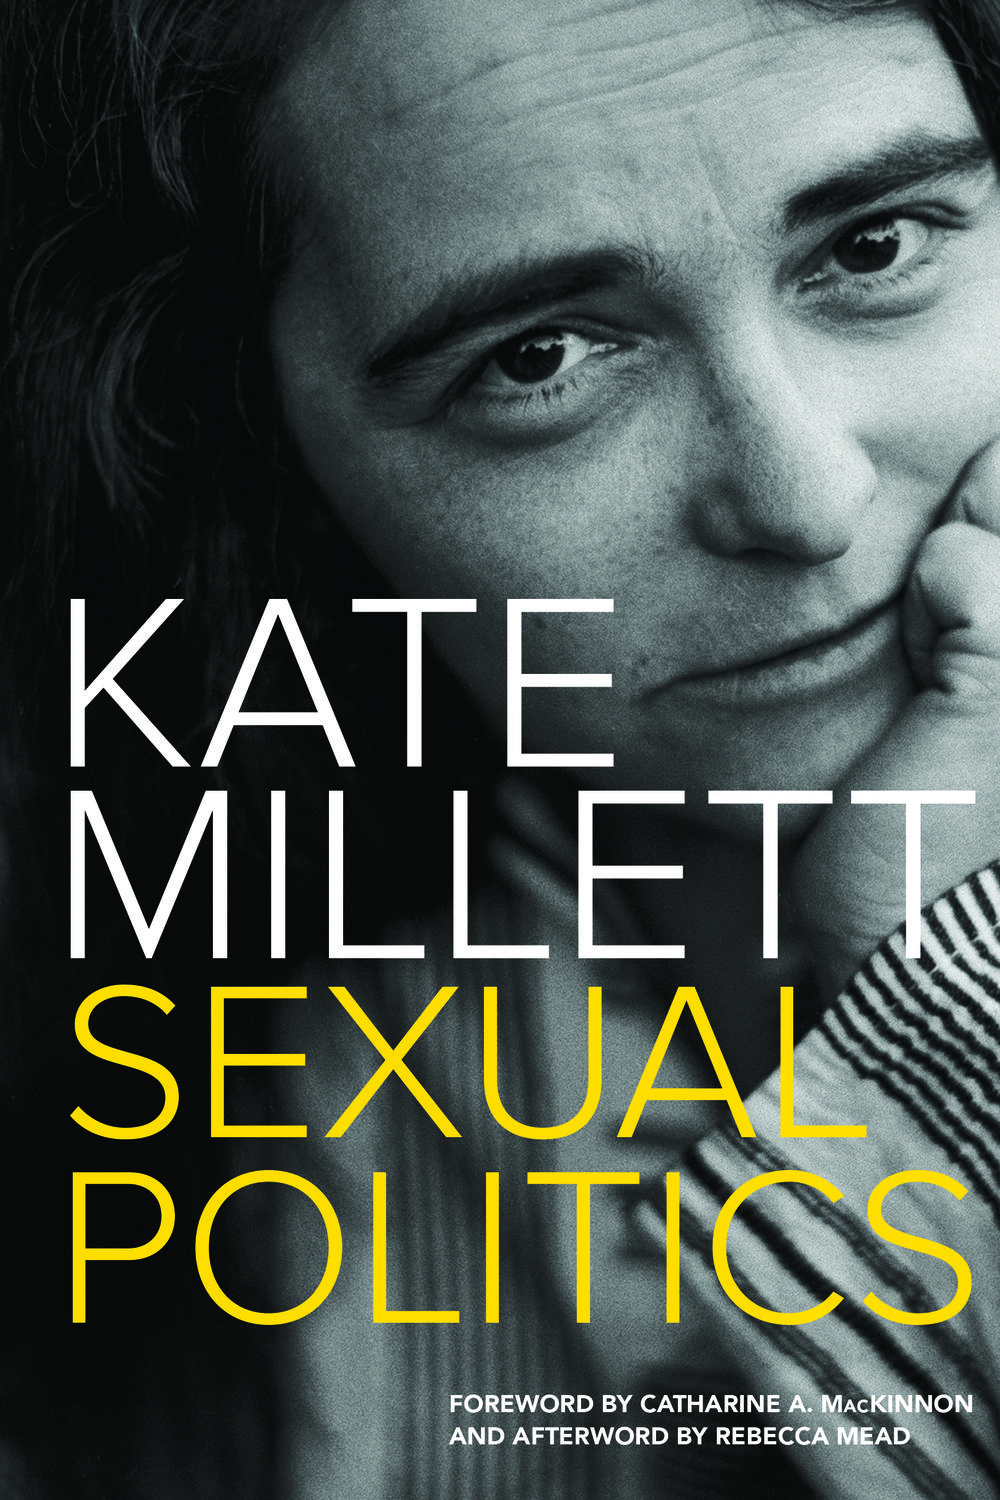 PDF Sexual Politics by Kate Millett eBook Perlego pic